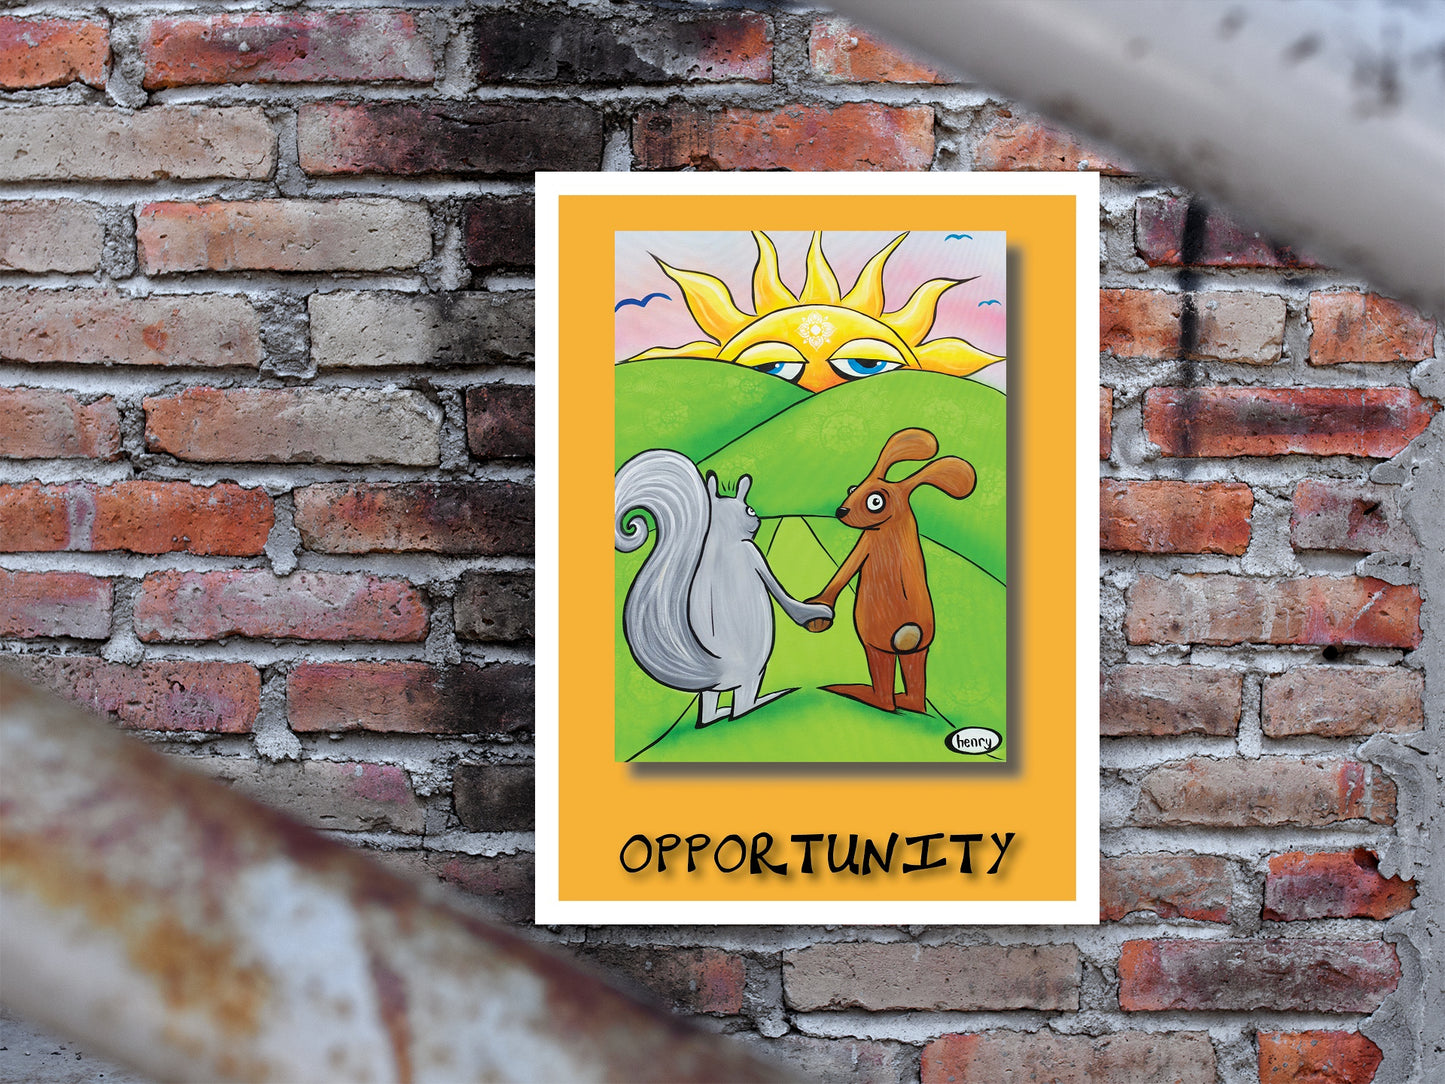 Opportunity - A Radical Abundance Poster